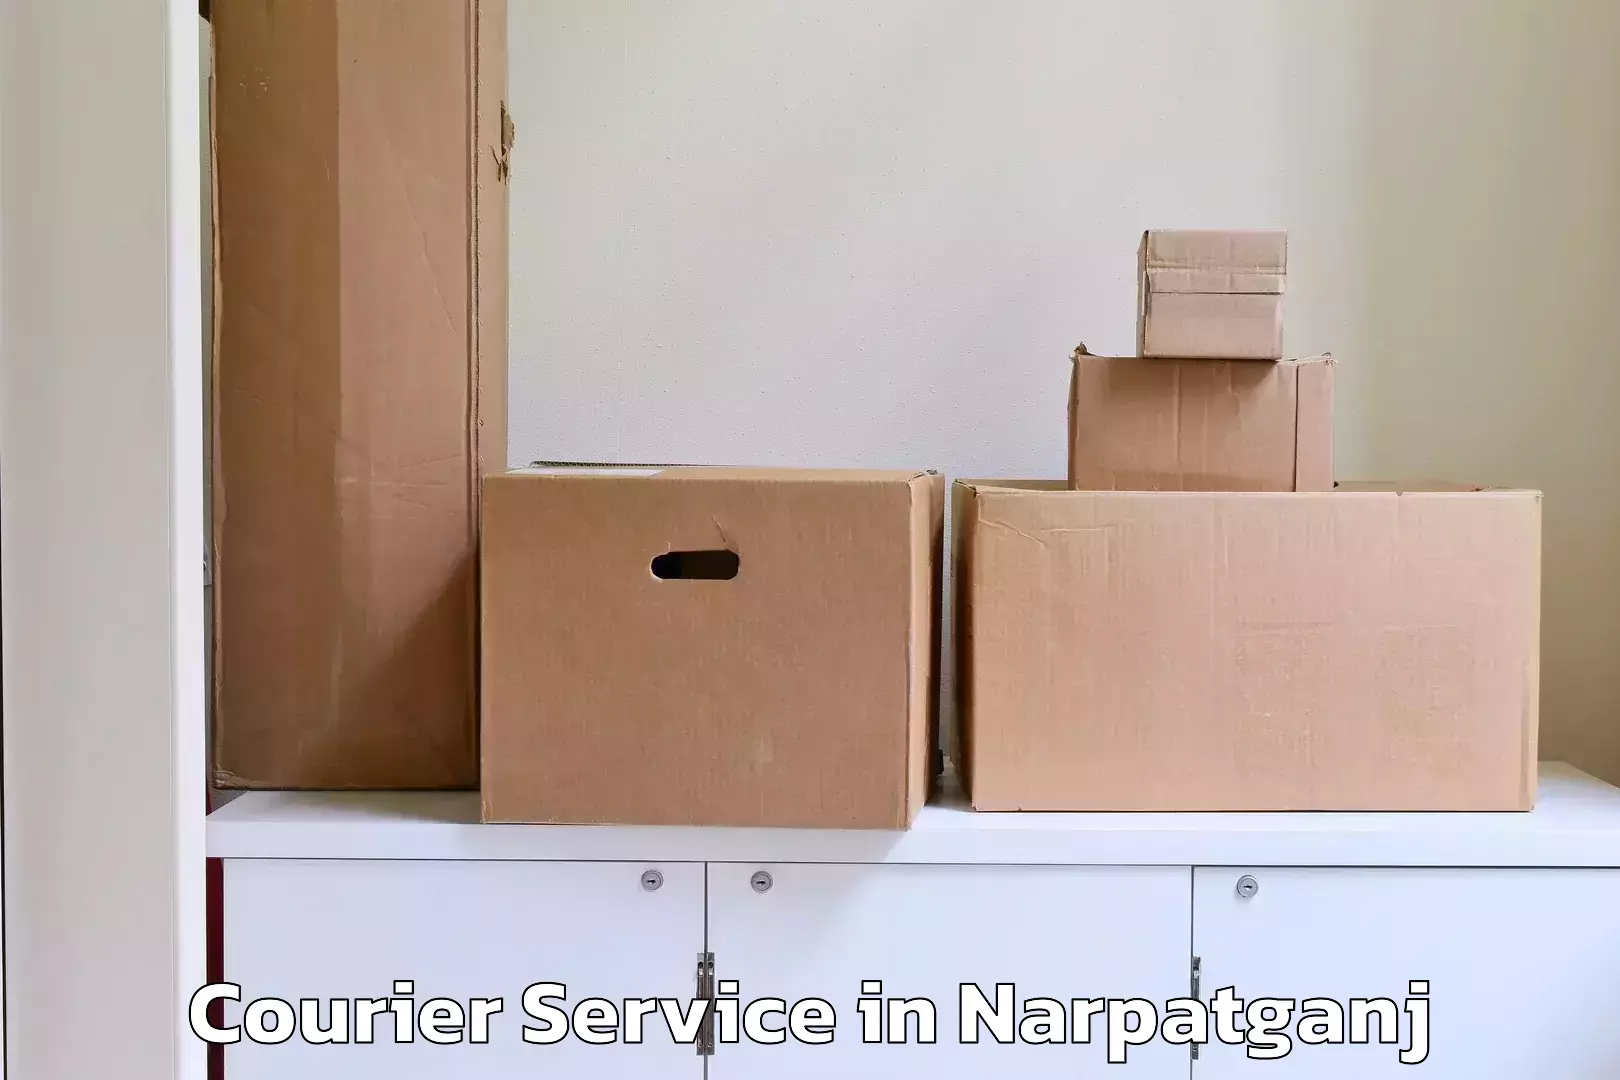 Customer-focused courier in Narpatganj